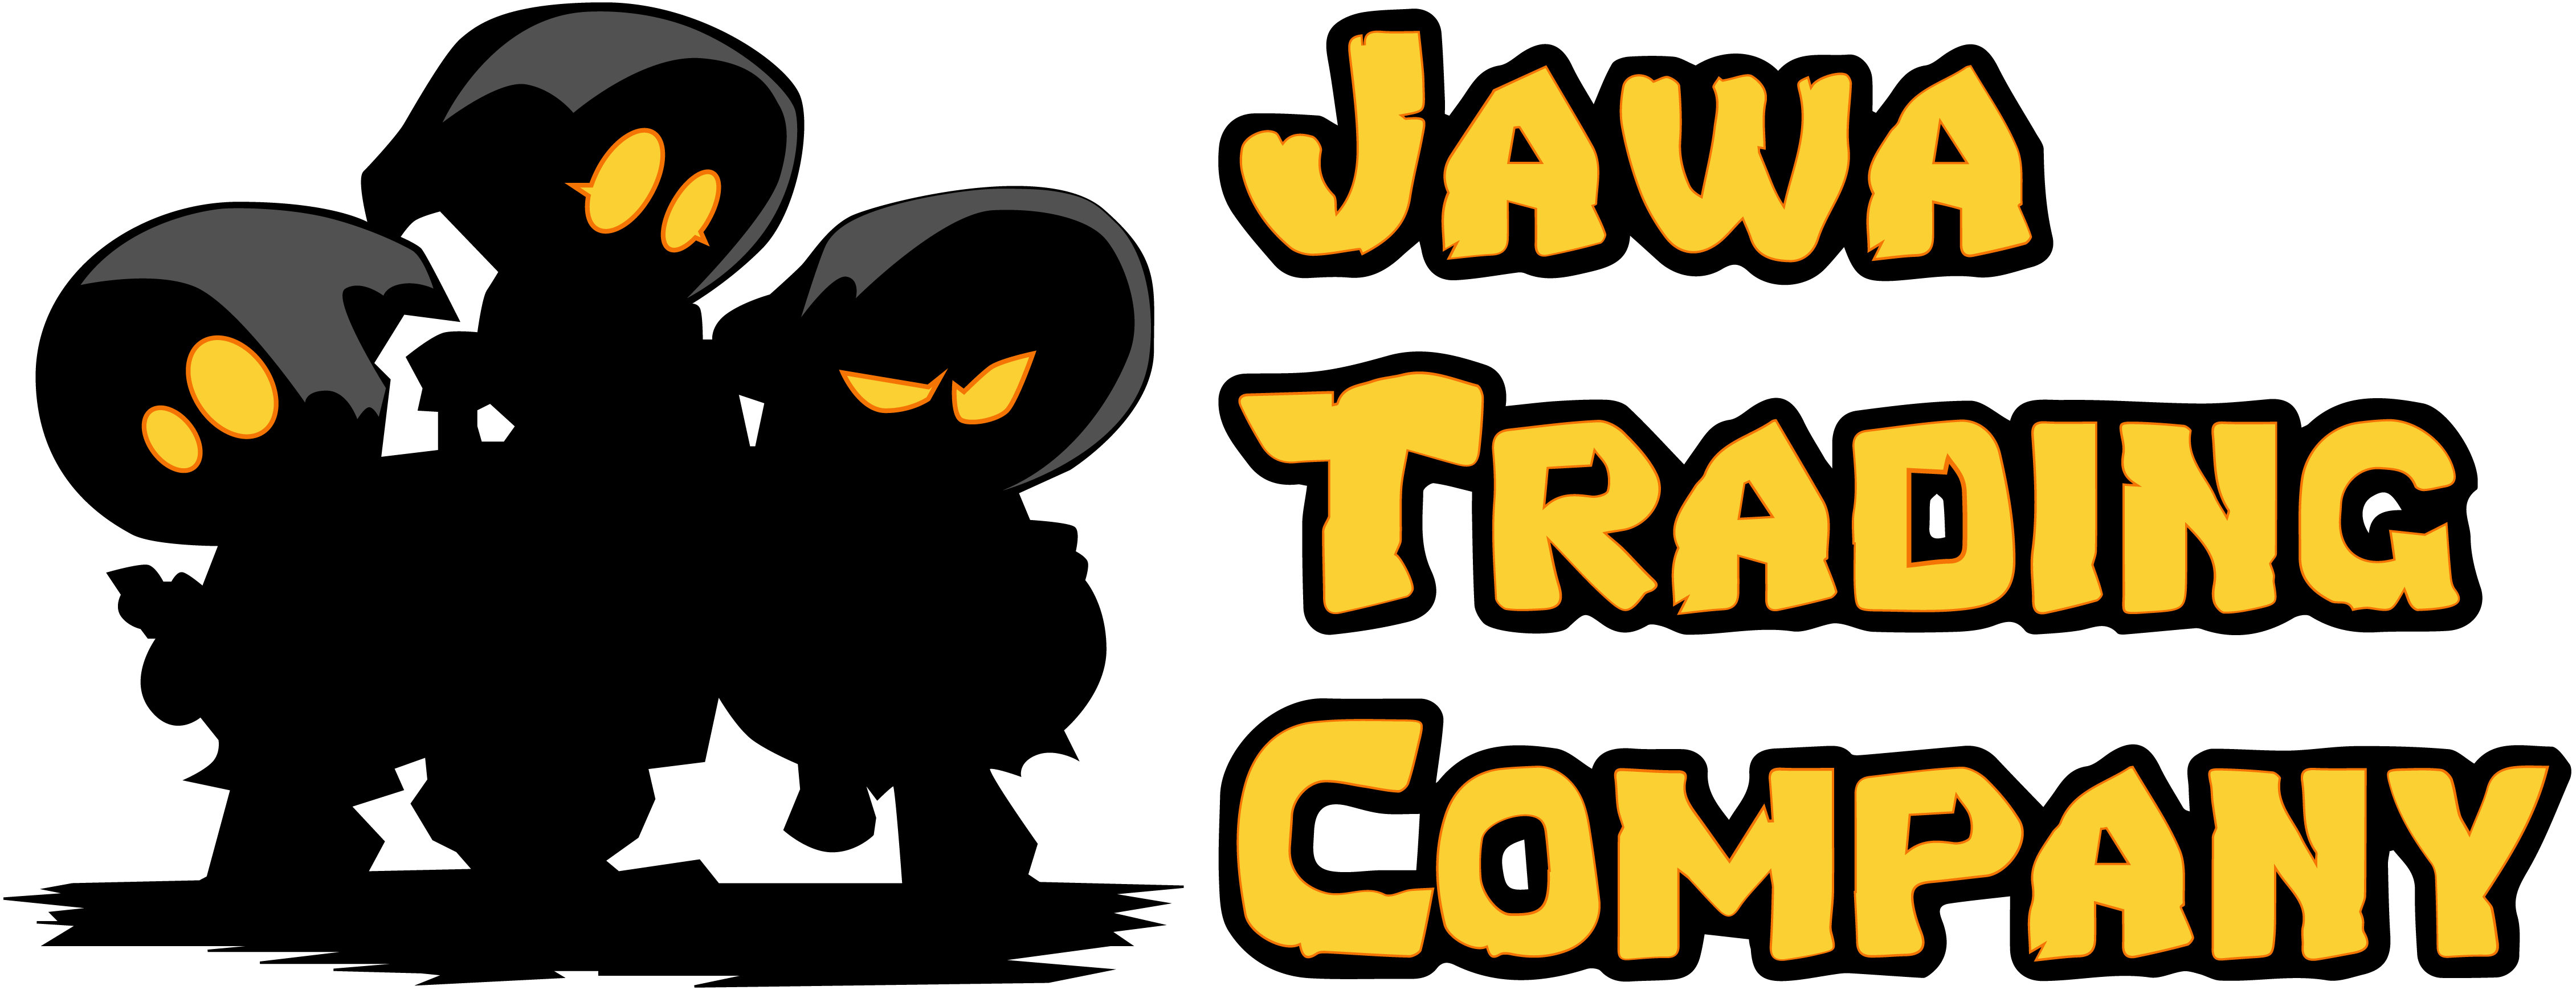 Jawa Trading Company Blog